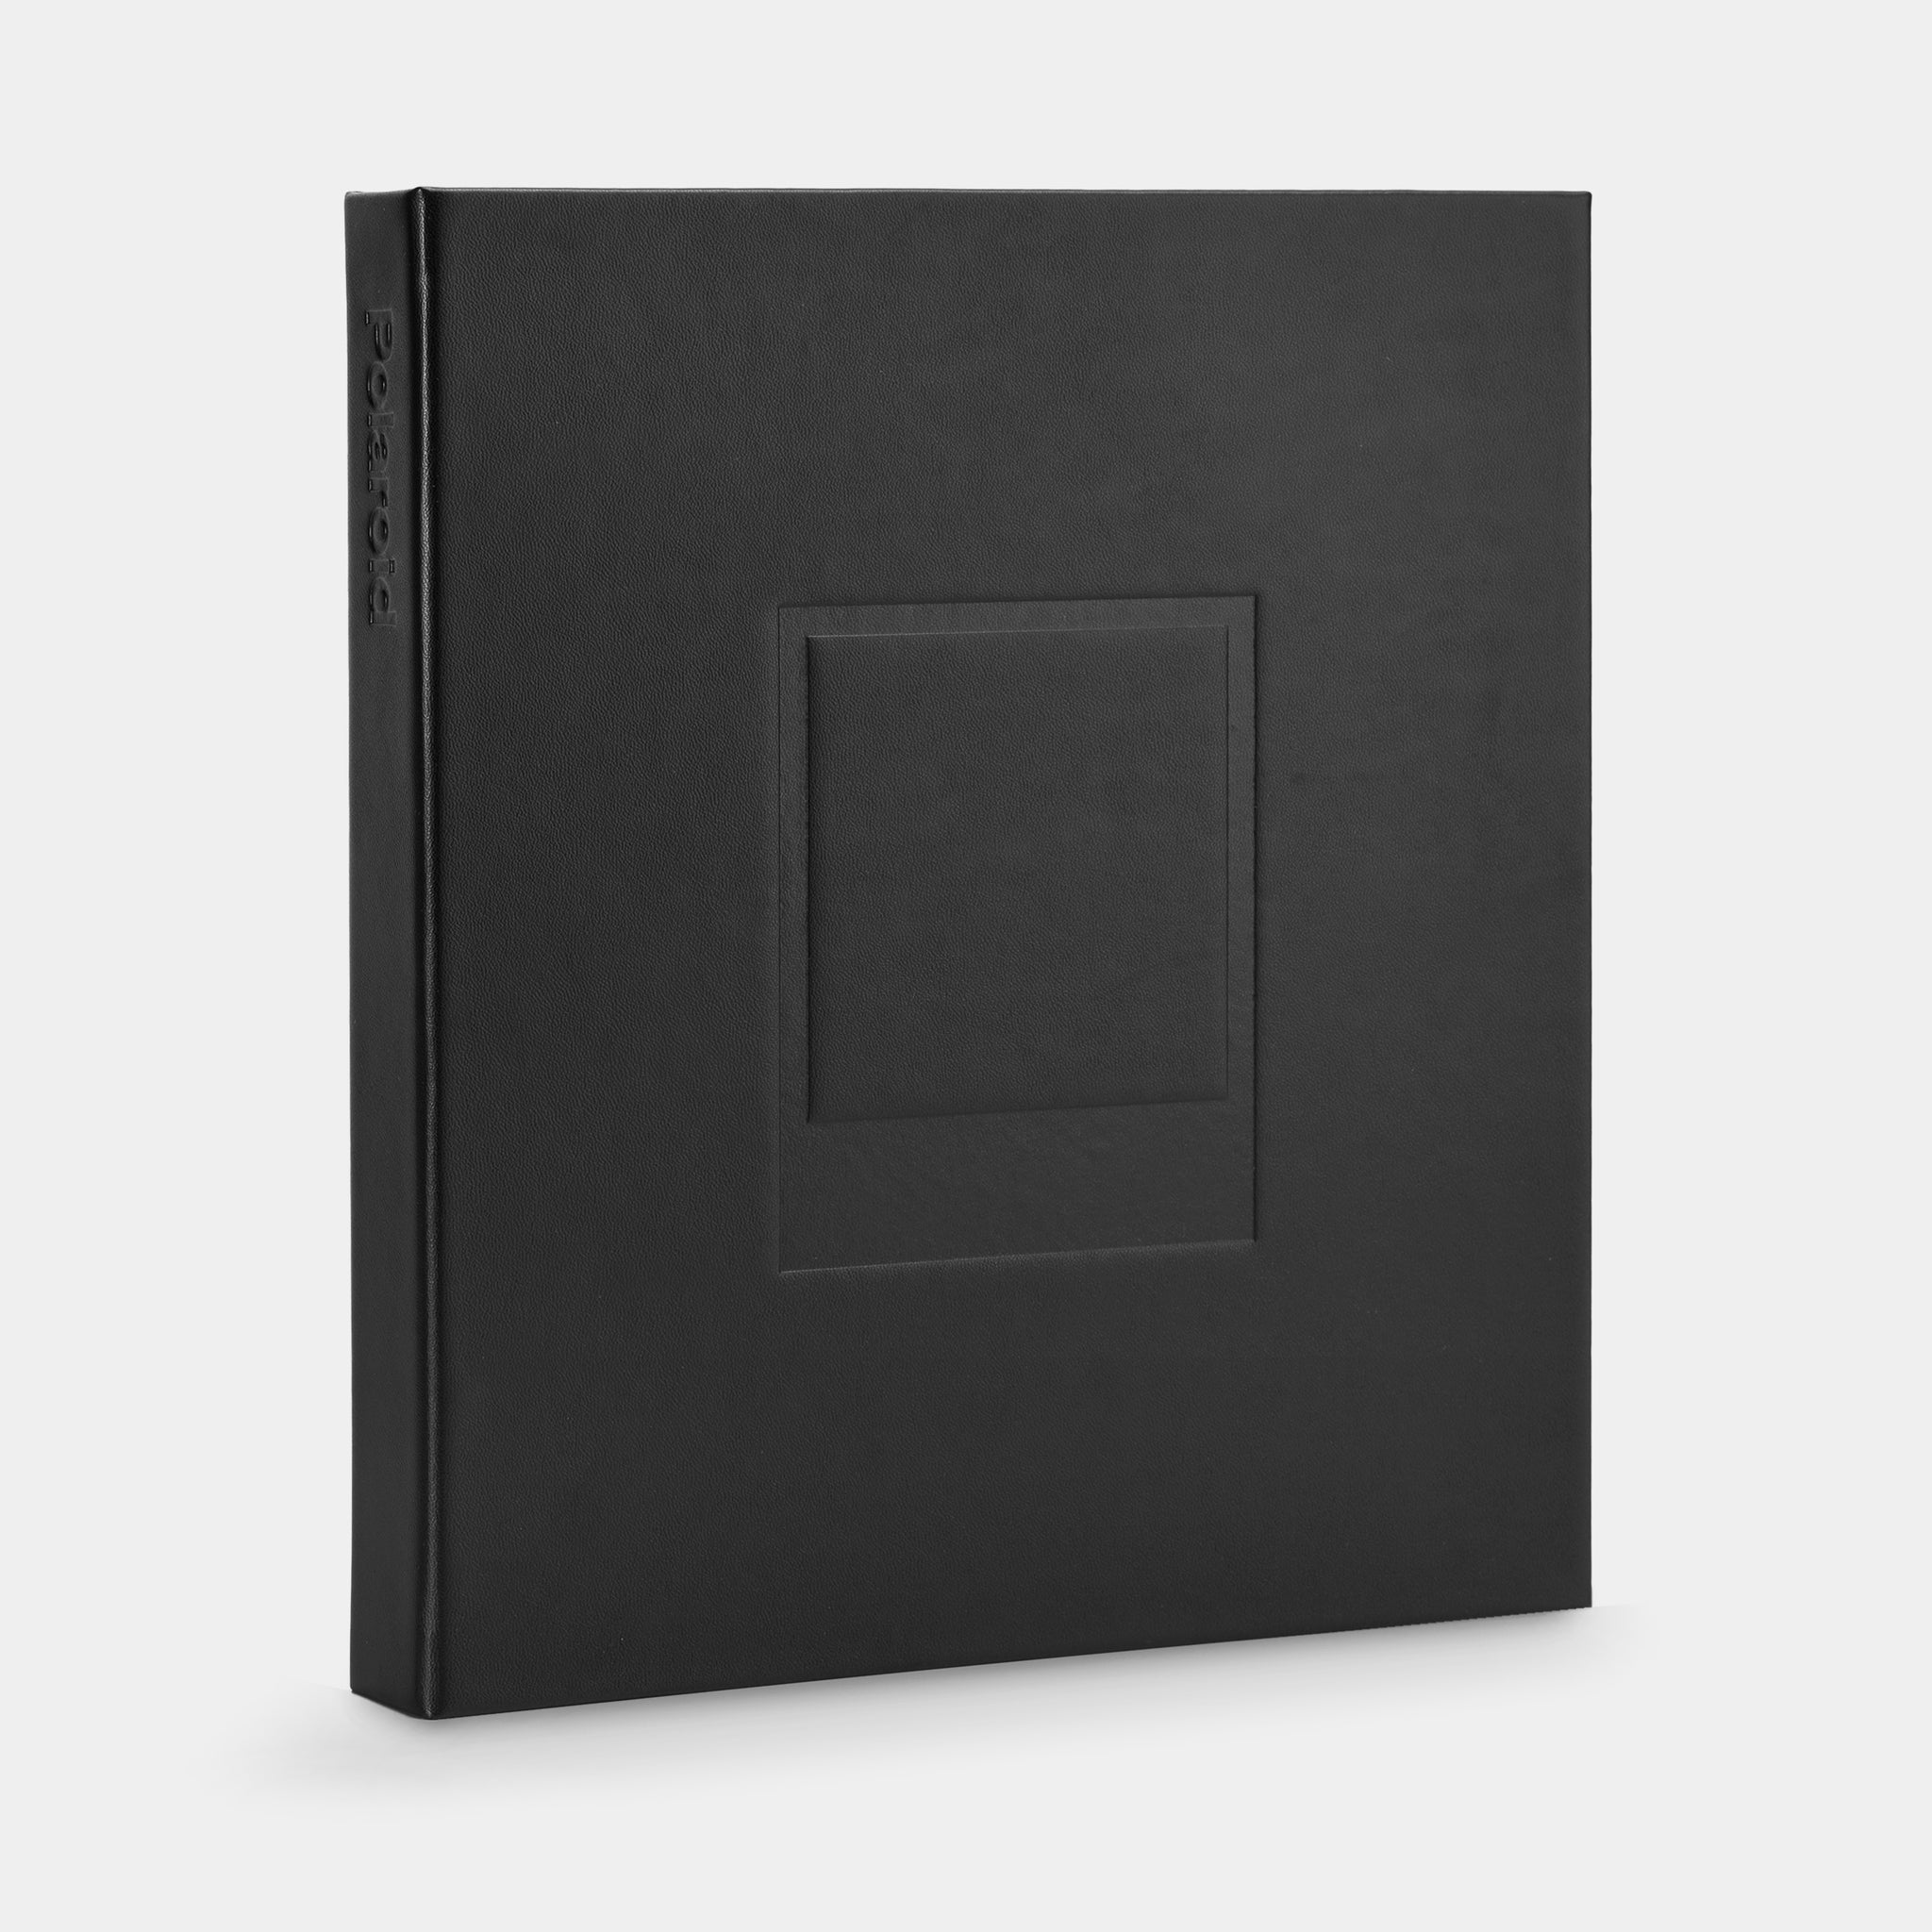 Polaroid Album photo grand format noir